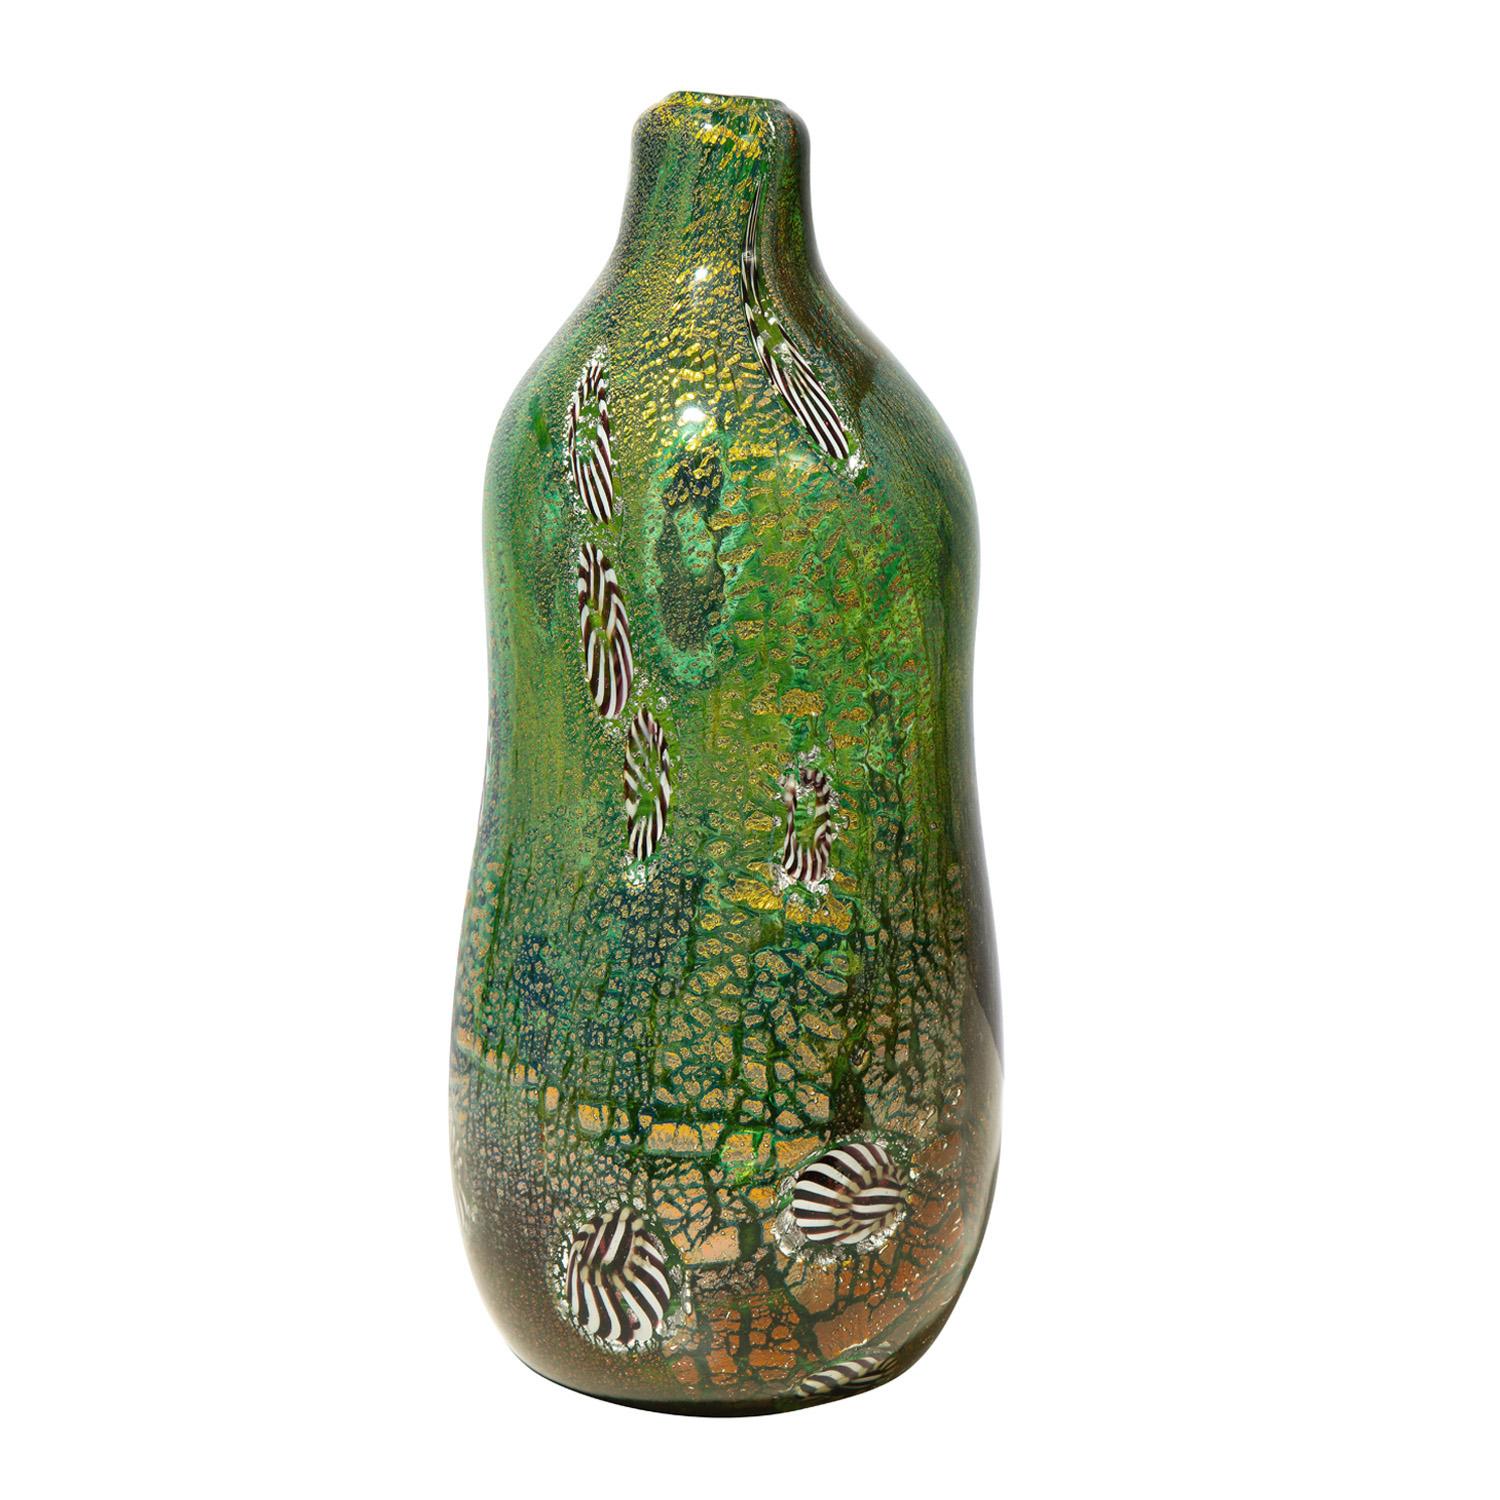 Hand-blown glass vase with undulating form from the Yokohama Series, green glass with murrhines and silver foil, by Aldo Nason for Arte Vetraria Muranese (A.V.E.M.), Murano Italy, 1960's (signed on bottom “Nason Aldo for Carlo Dedy”). Nason, who